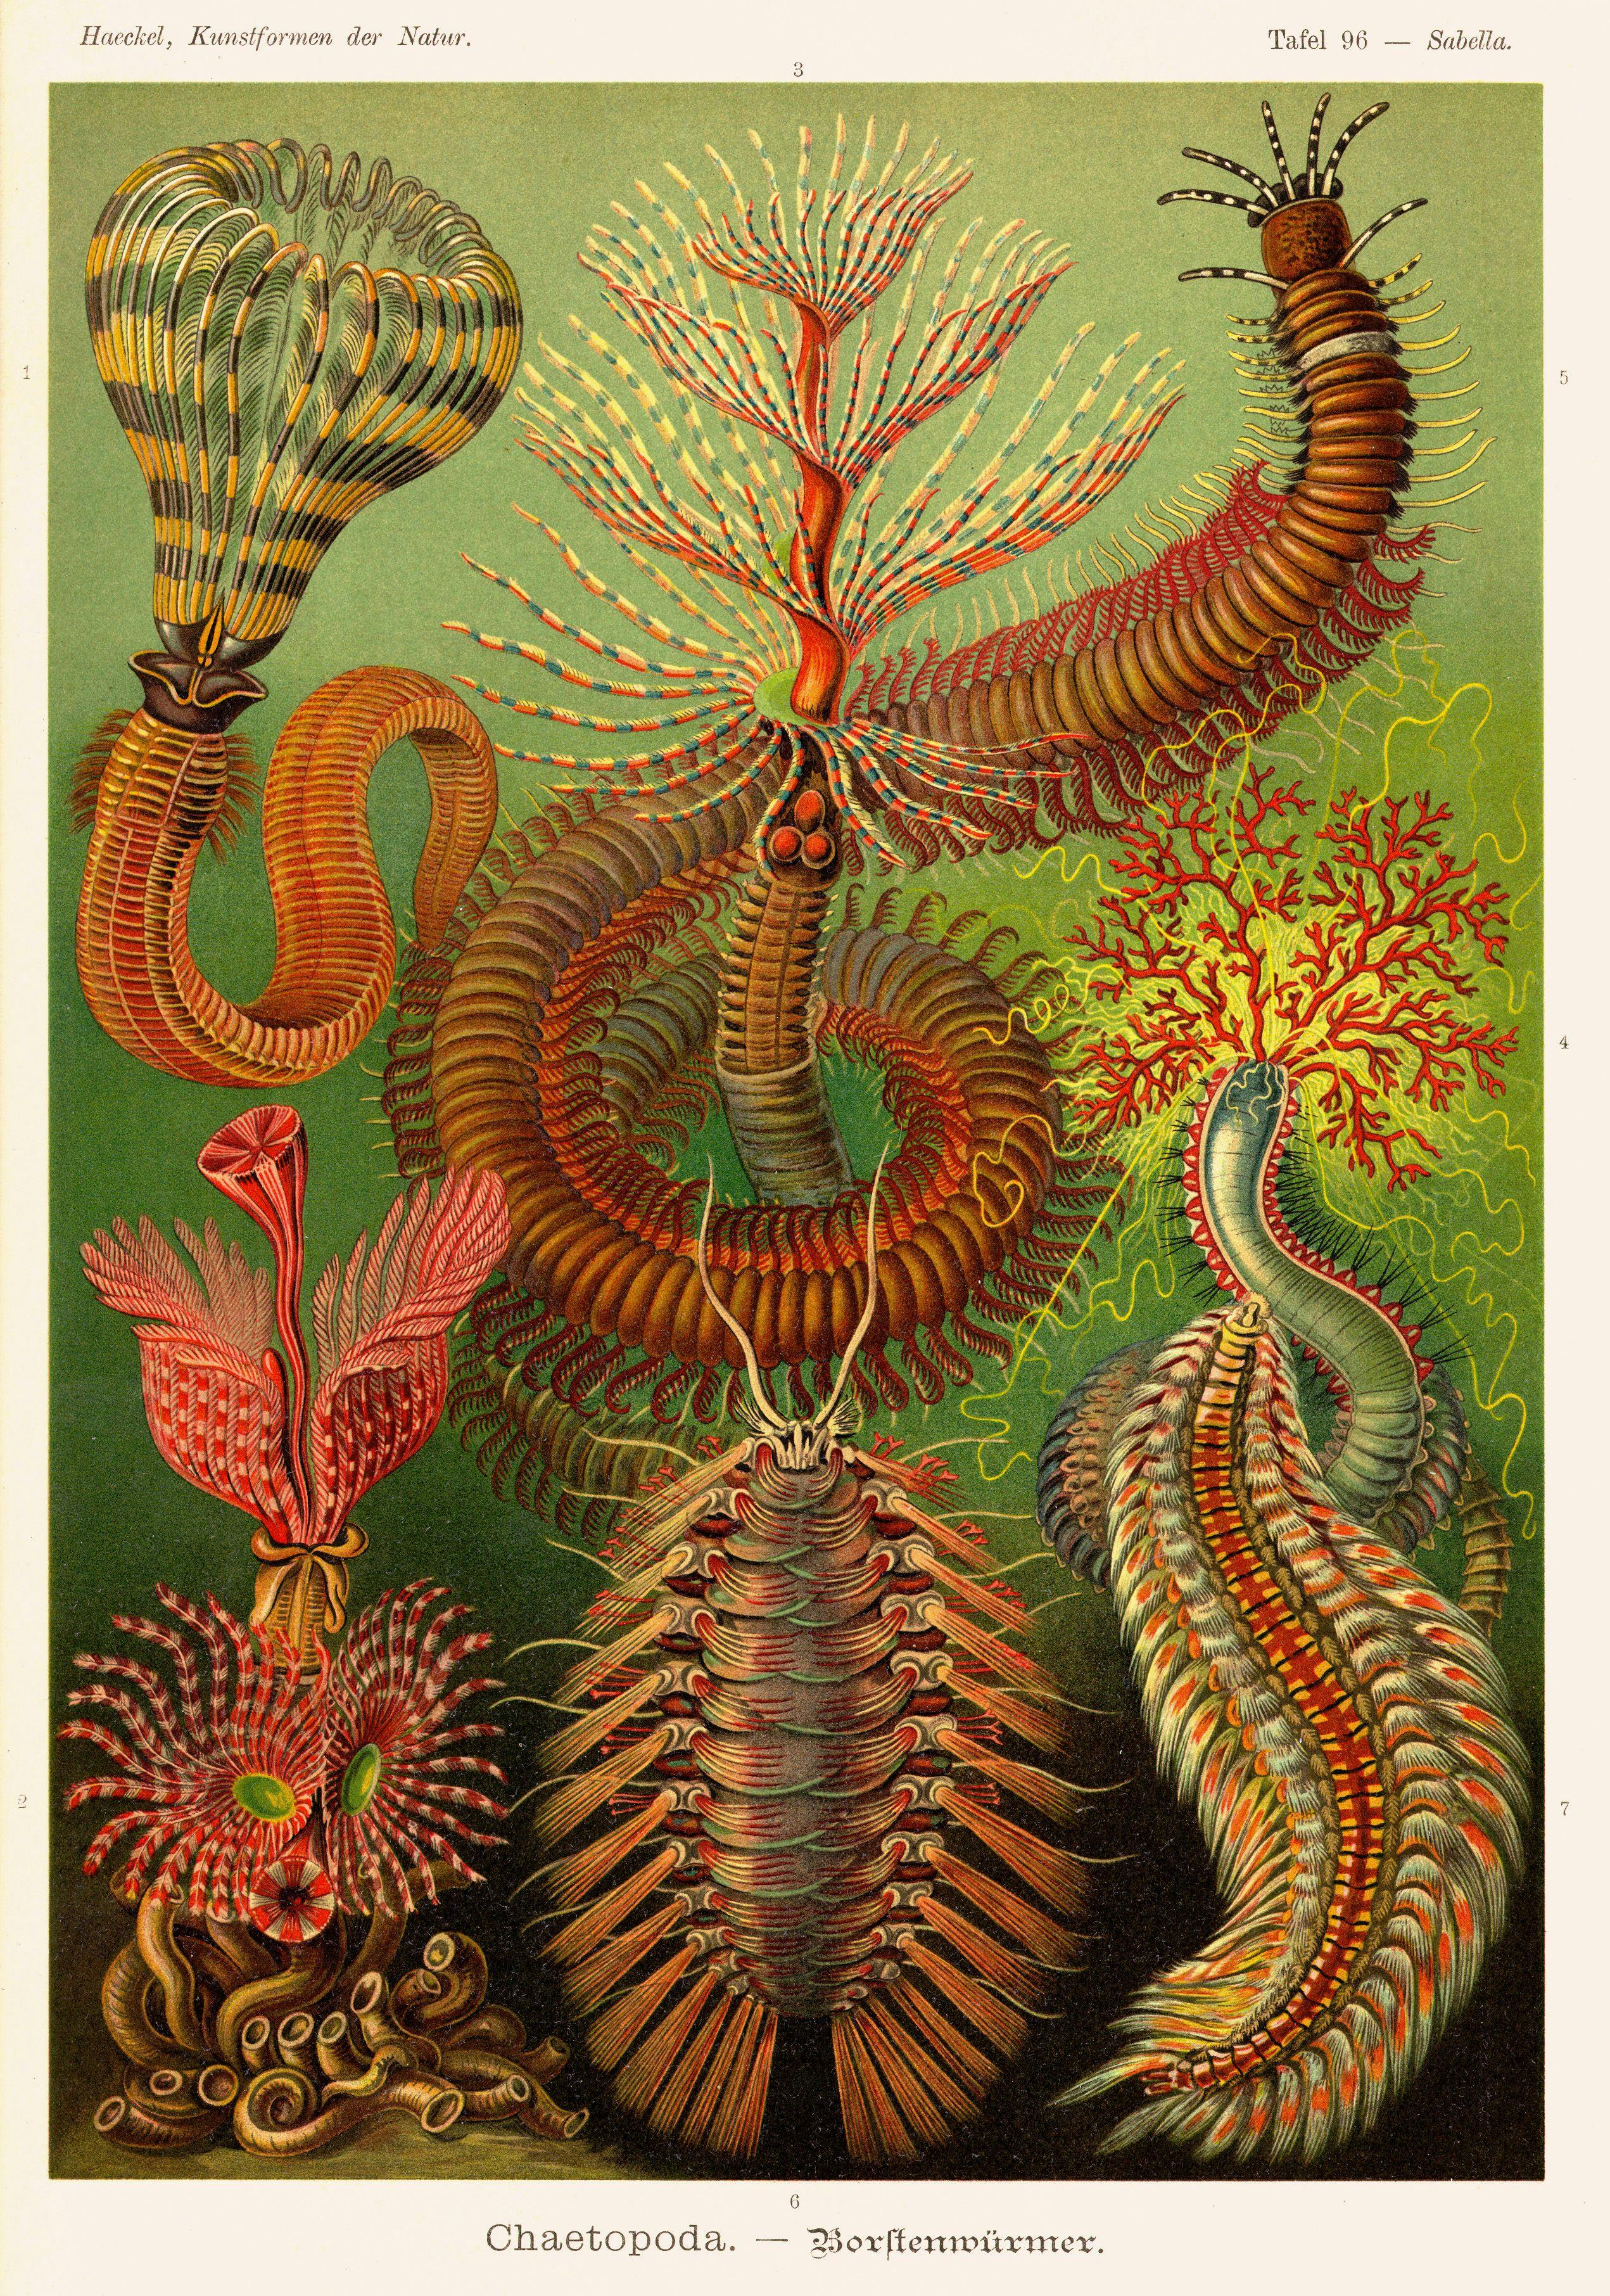 Konstverk: Ernst Haeckel, Kunstformen der Natur, plate 96, 1899–1904